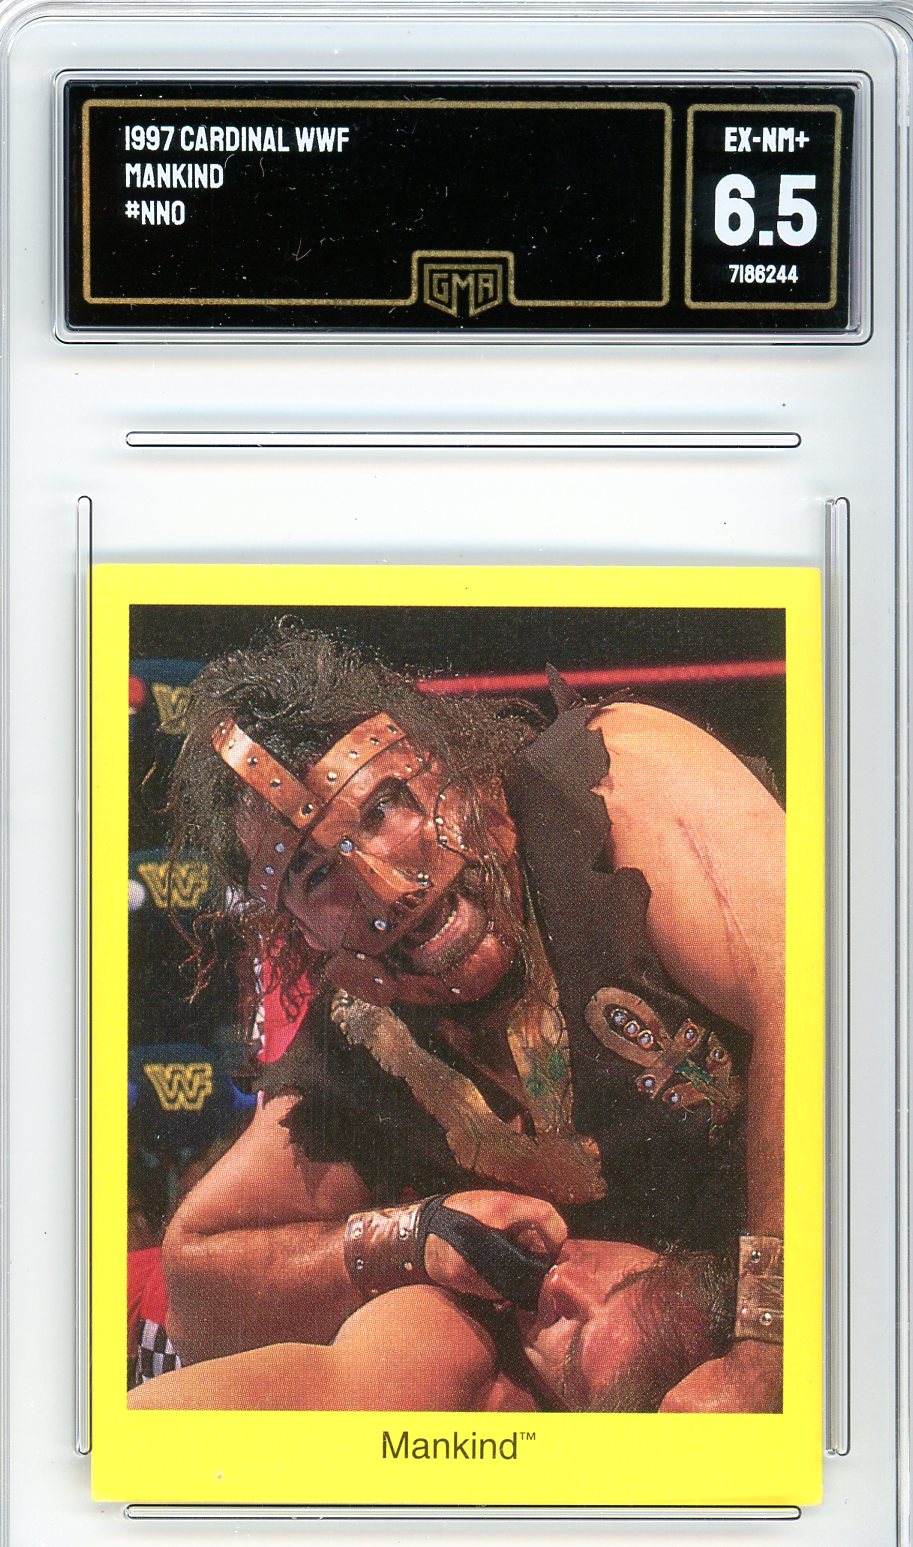 1997 Cardinal WWF Mankind Trading Card GMA 6.5